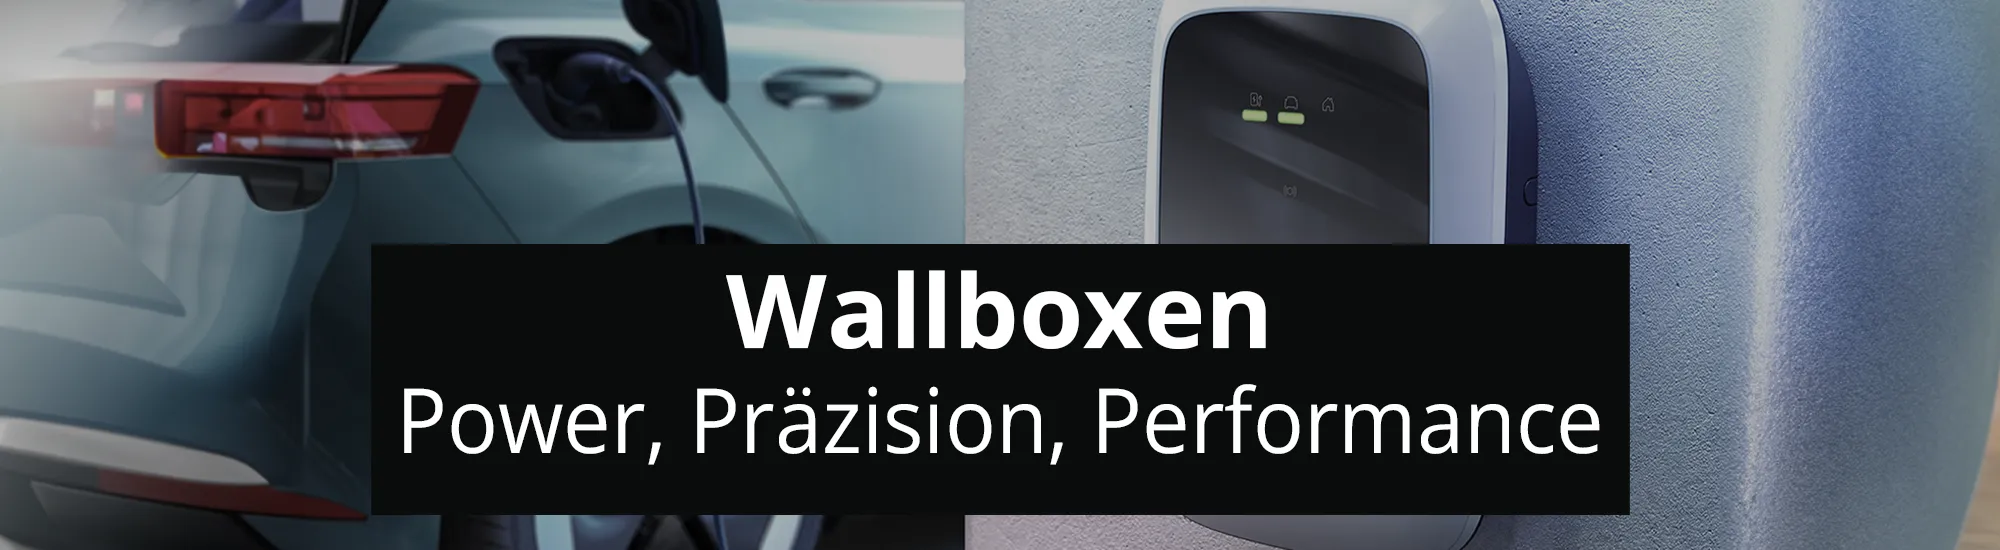 Wallbox header